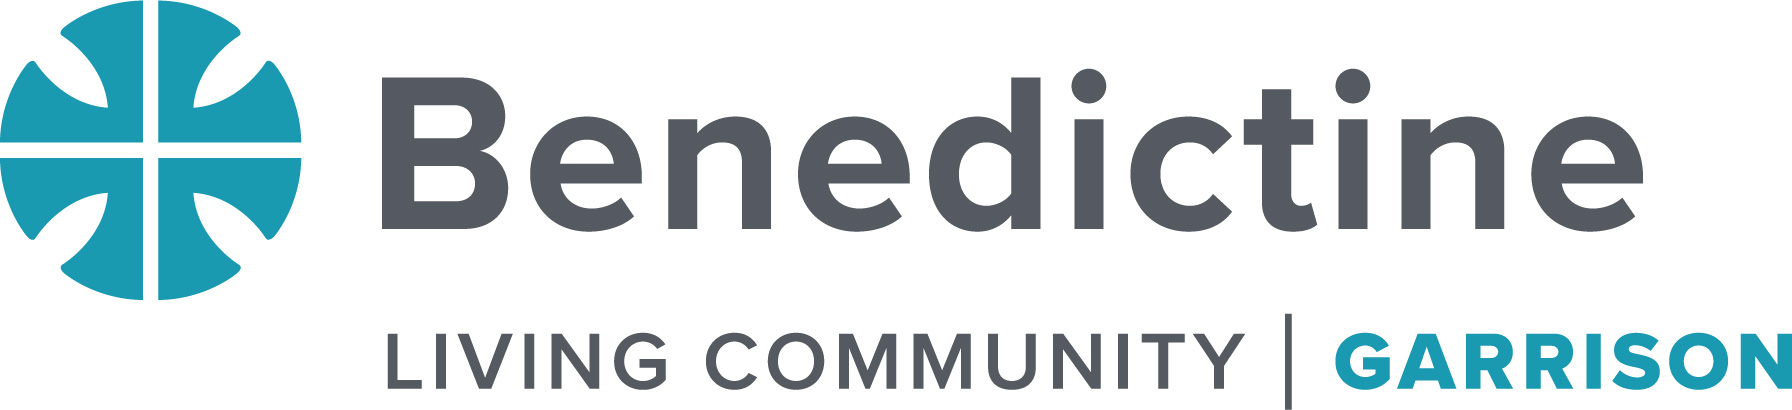 Benedictine Living Community - Garrison logo